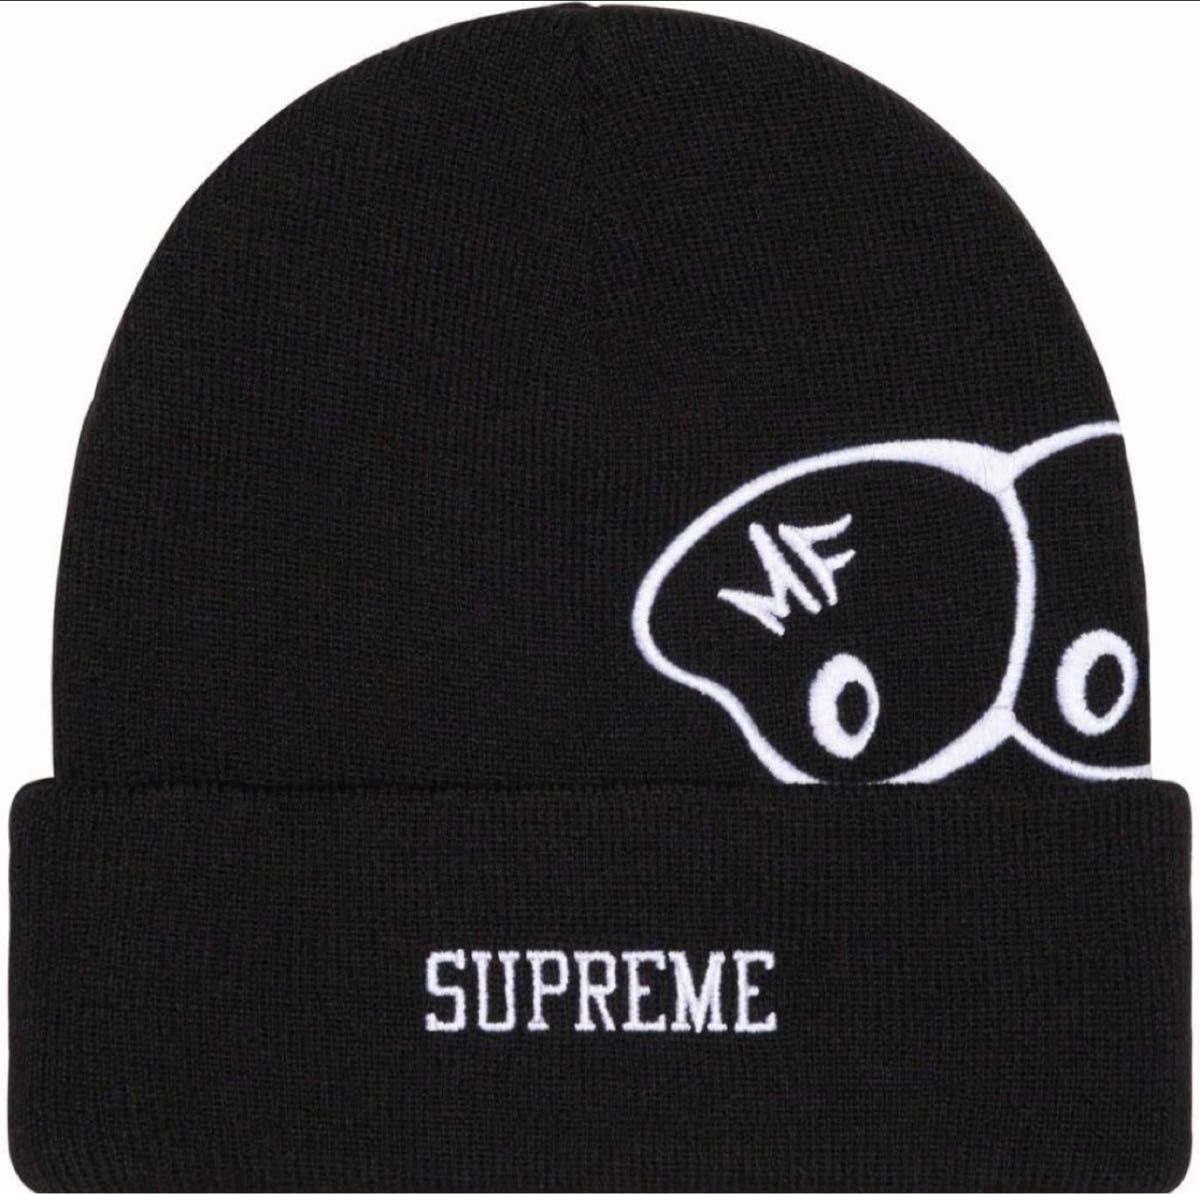 Supreme Mf Doom beanie ビーニー MFドゥーム BLACK ニット帽